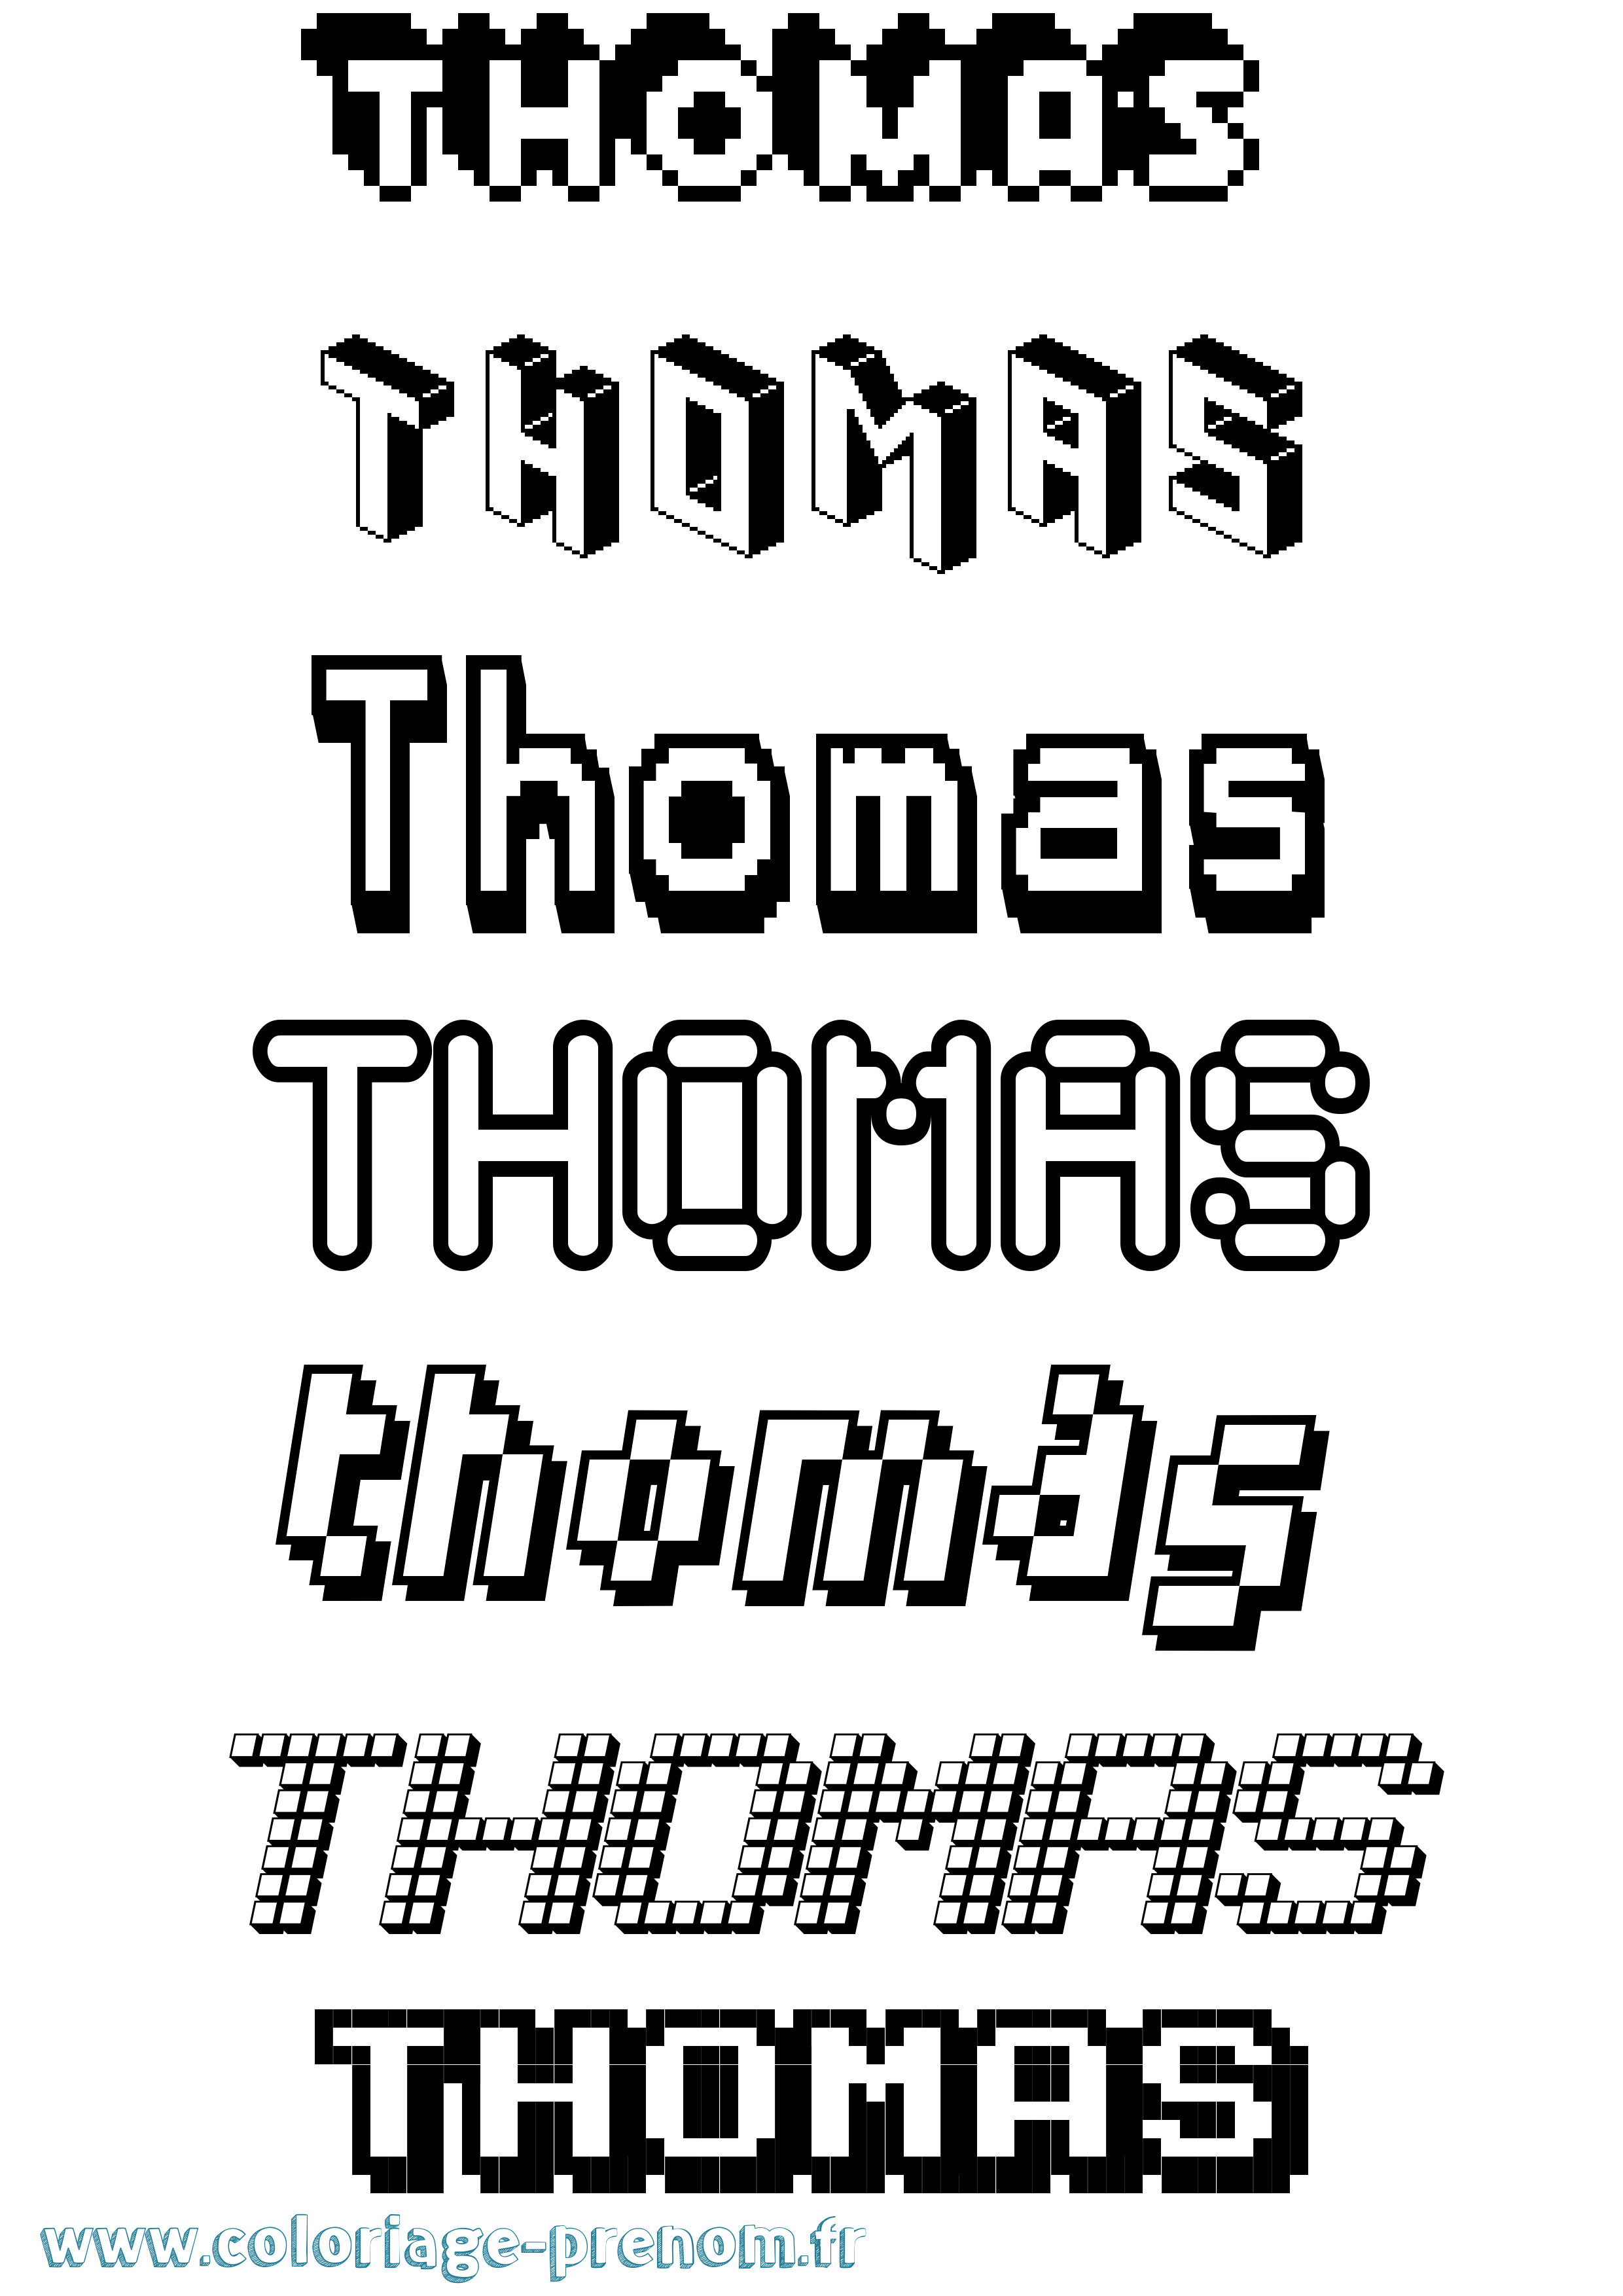 Coloriage prénom Thomas Pixel